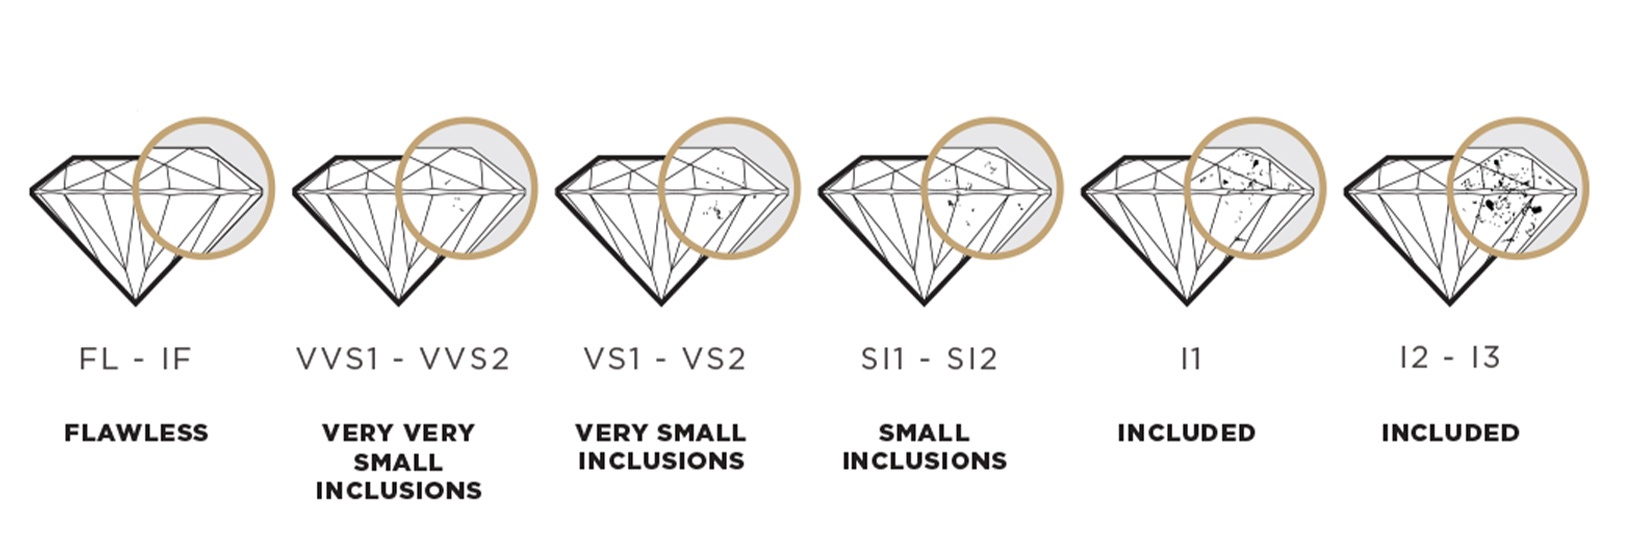 Diamond clarity is graded using the diamond clarity scale